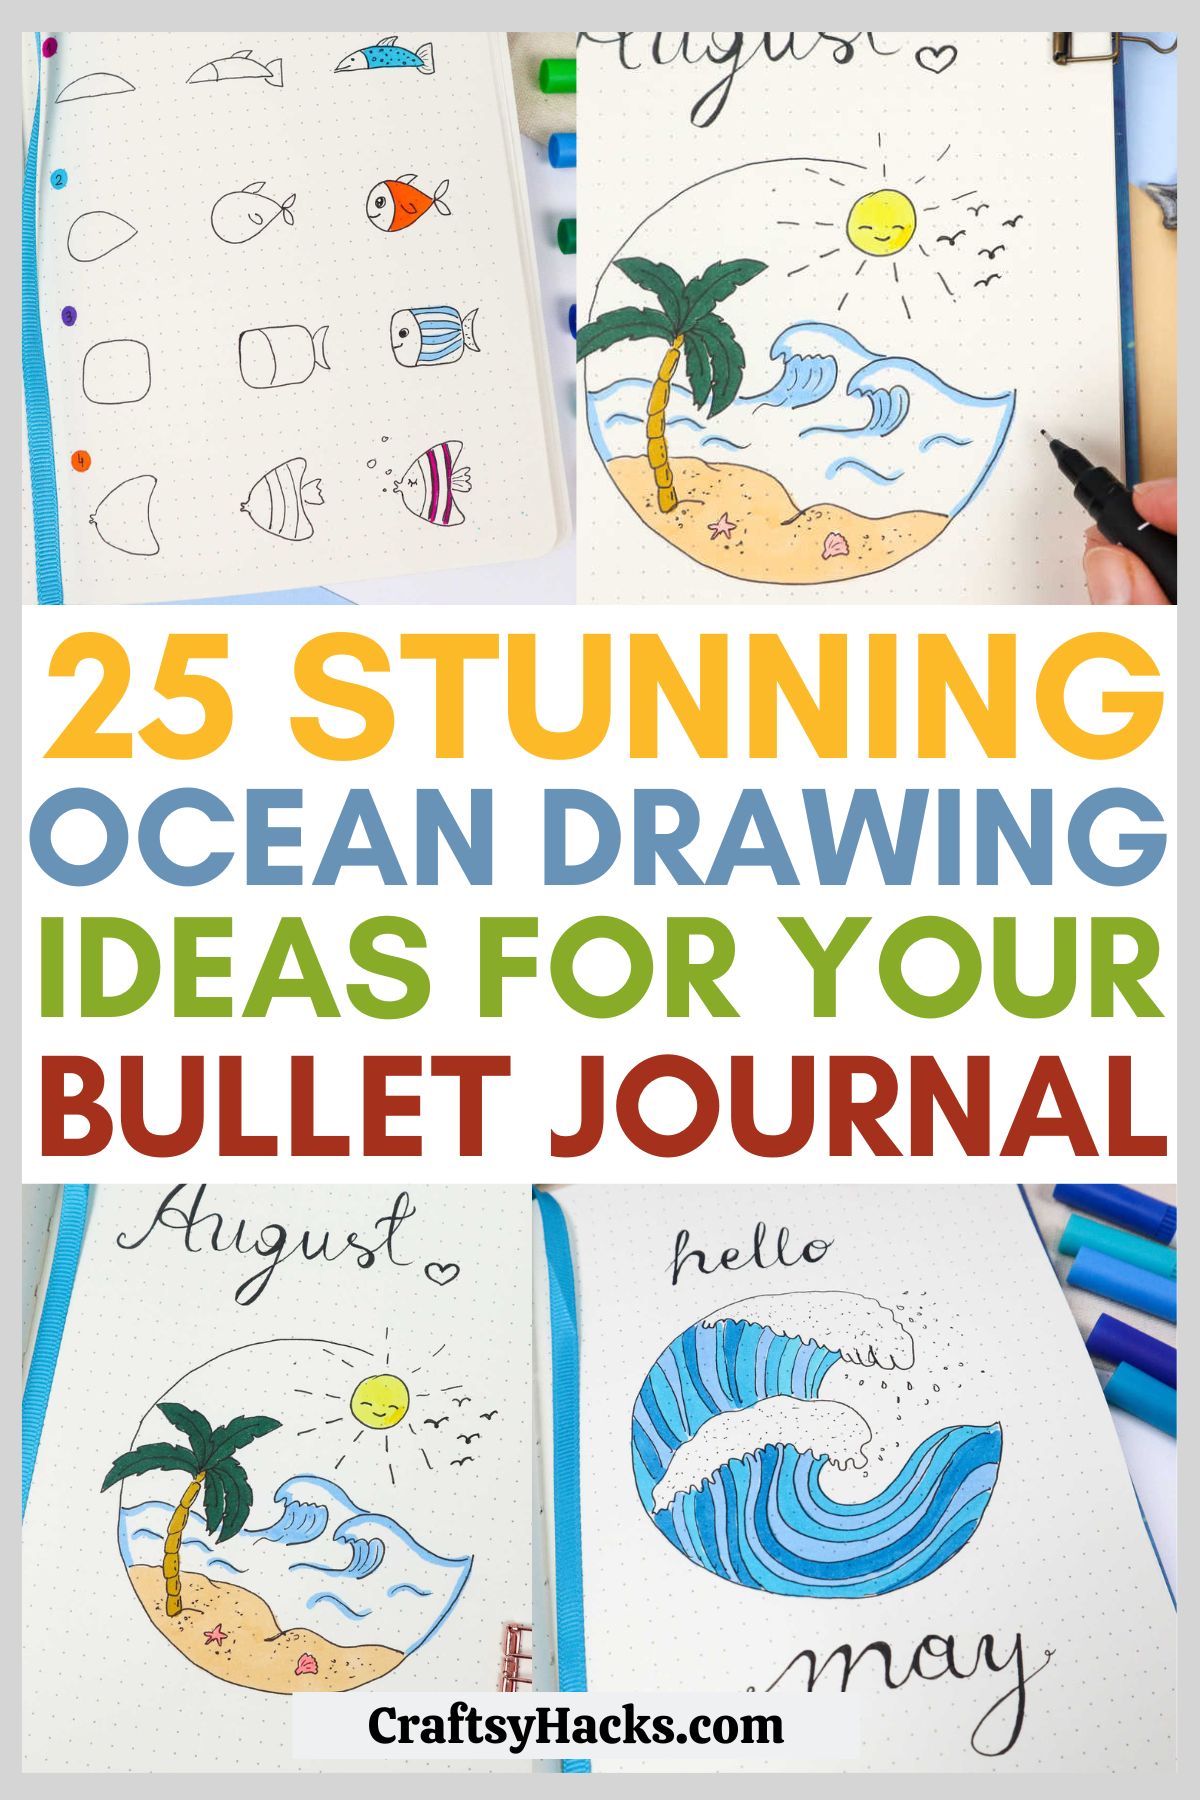 Ocean doodle drawing ideas